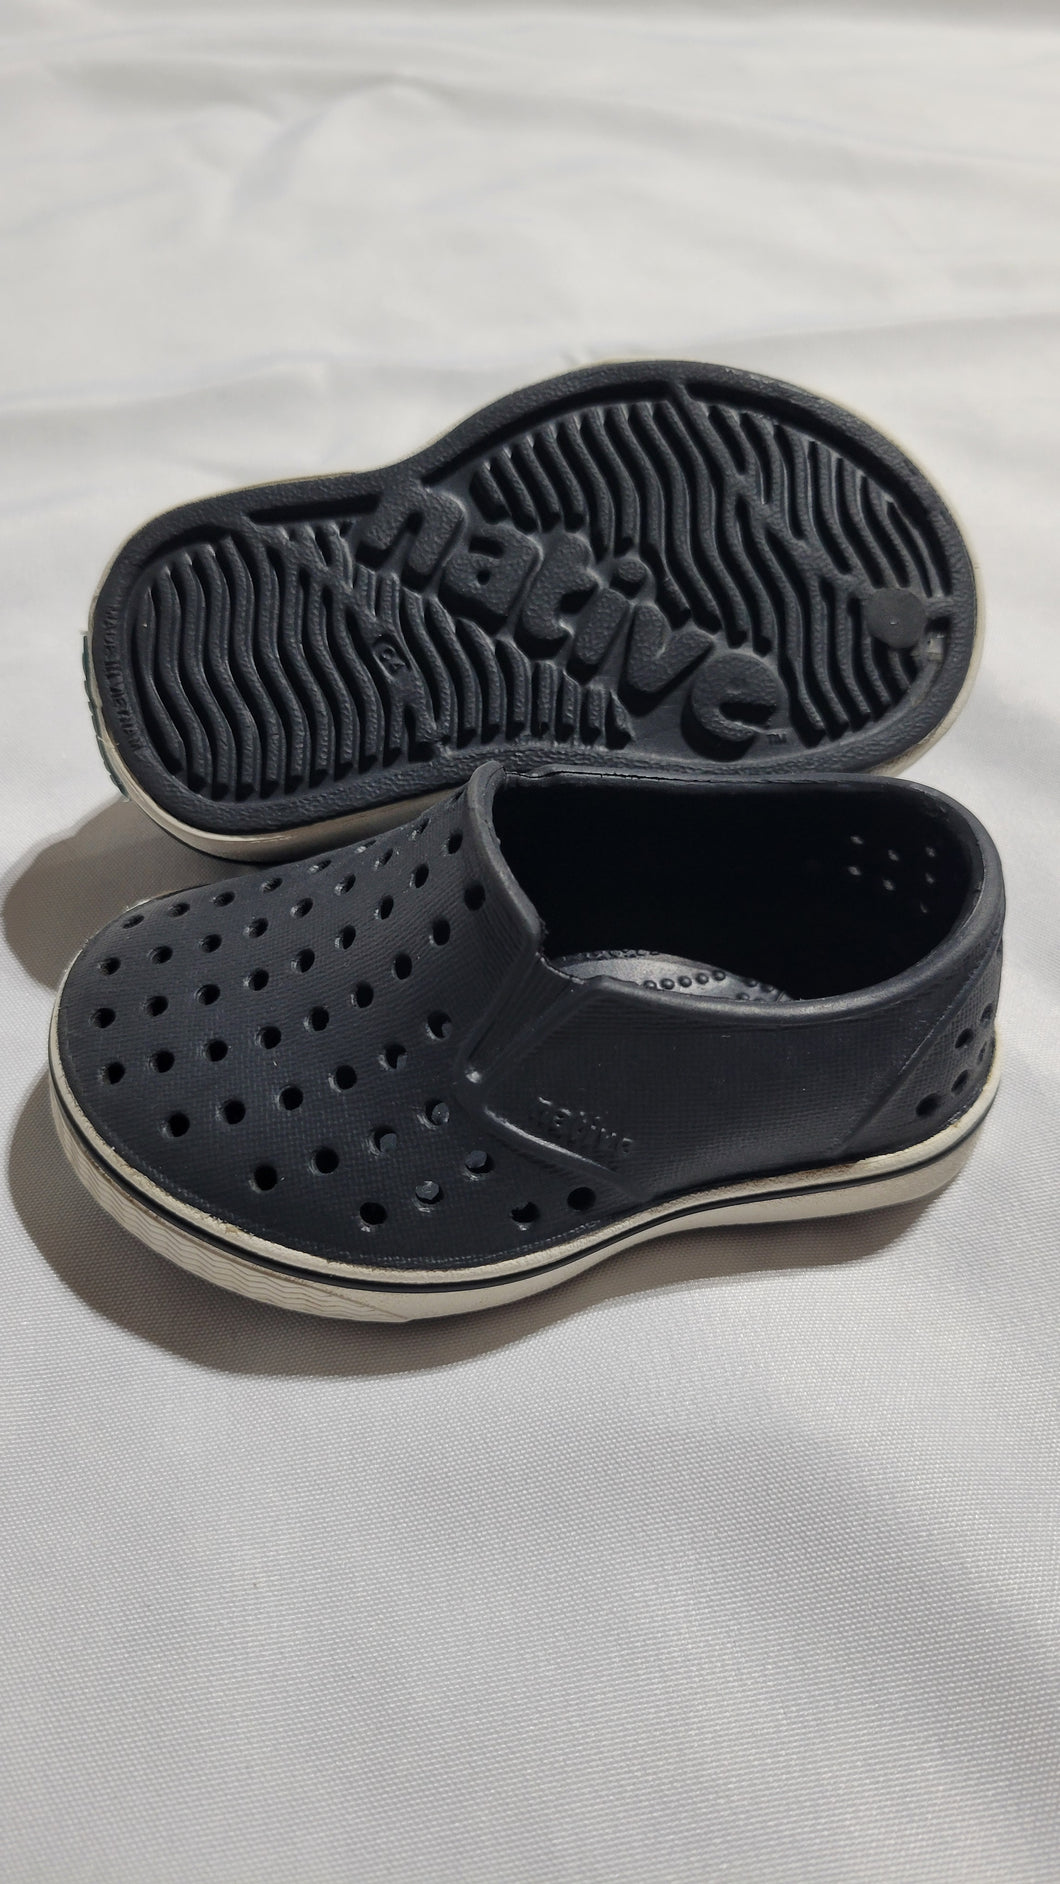 Native toddler size 4 (c4) Navy blue slip on shoes like new! 4